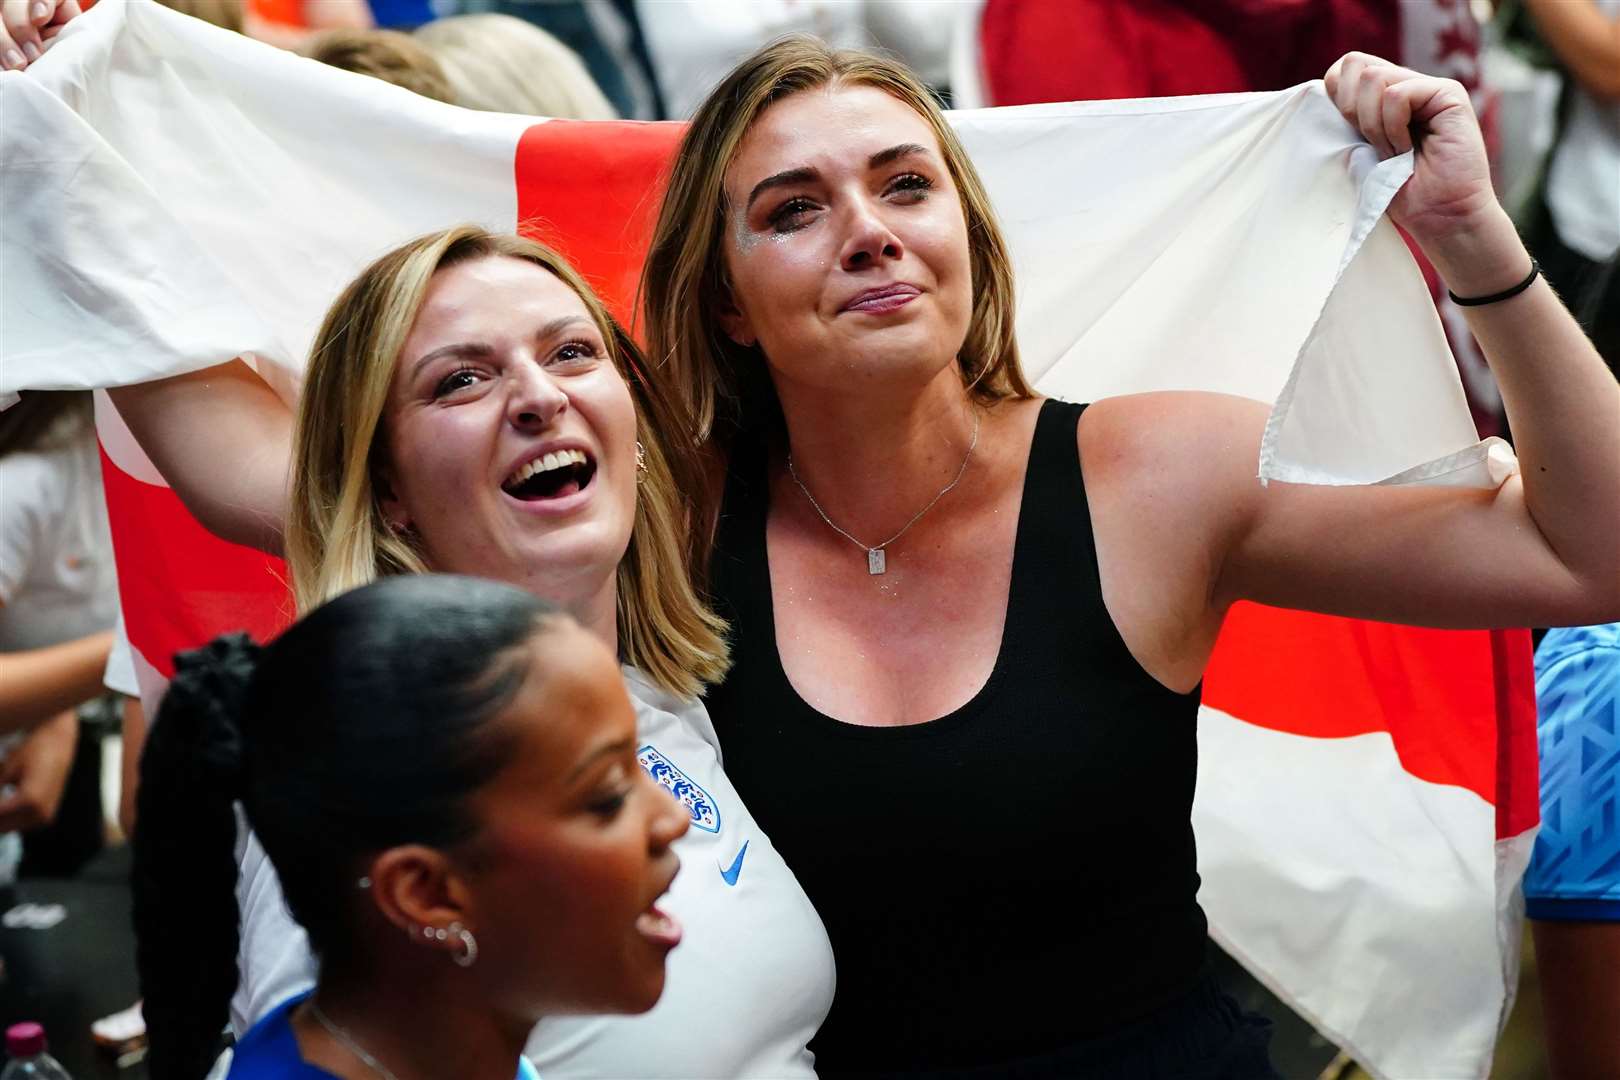 England fans celebrate following the match (Victoria Jones/PA)